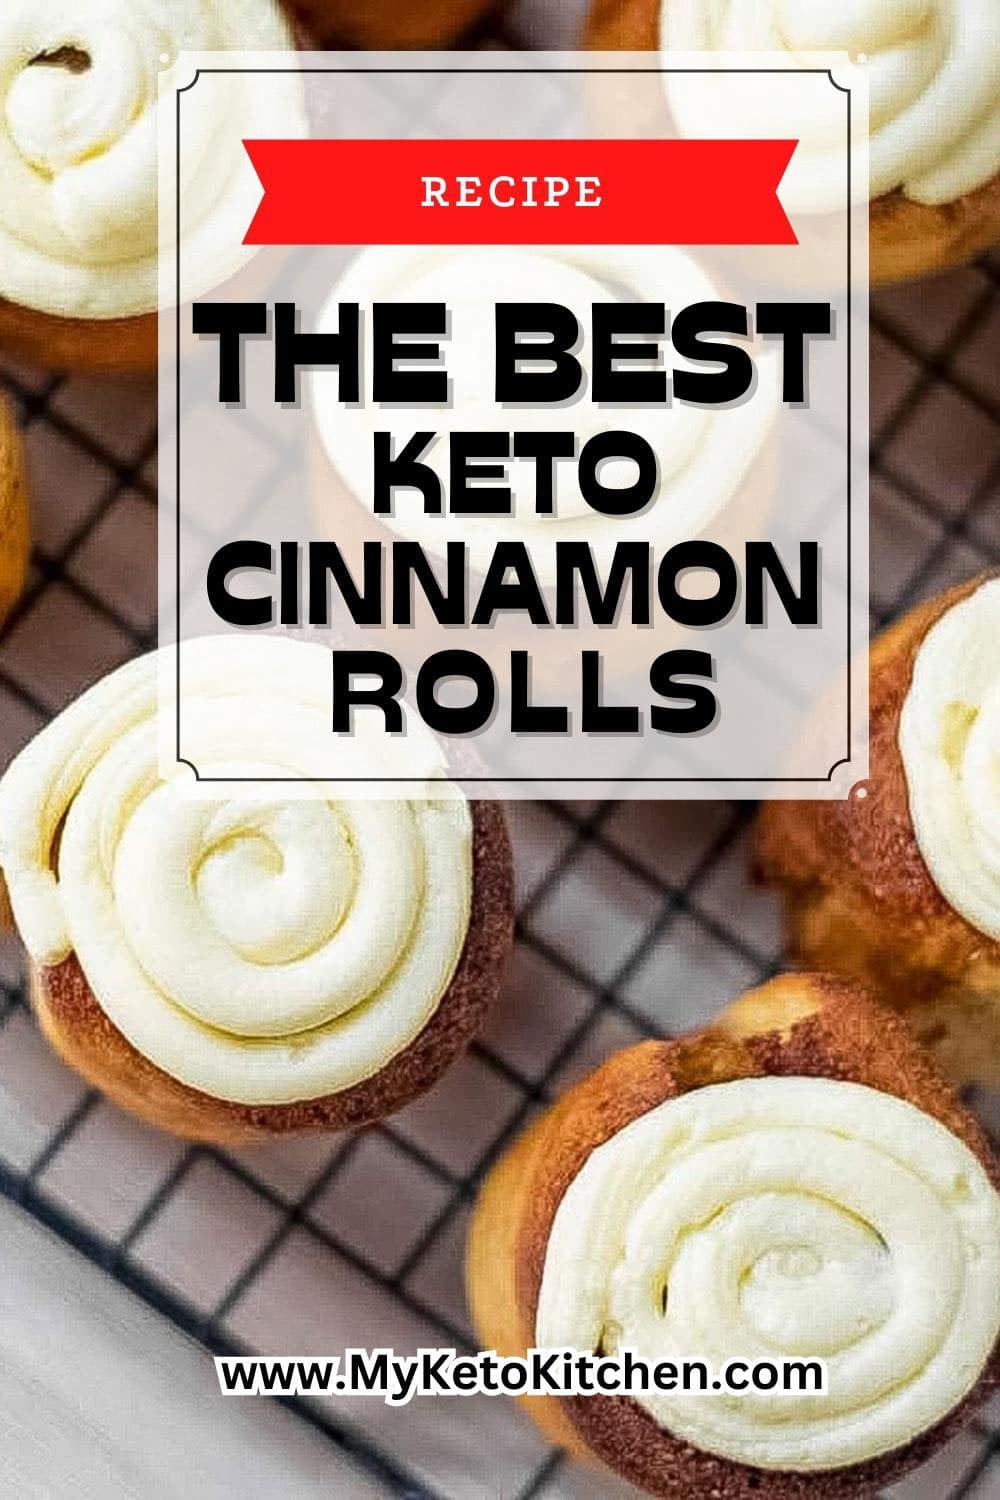 The Best Keto Cinnamon Rolls Recipe - Low-Carb, Gluten-Free & Delicious!